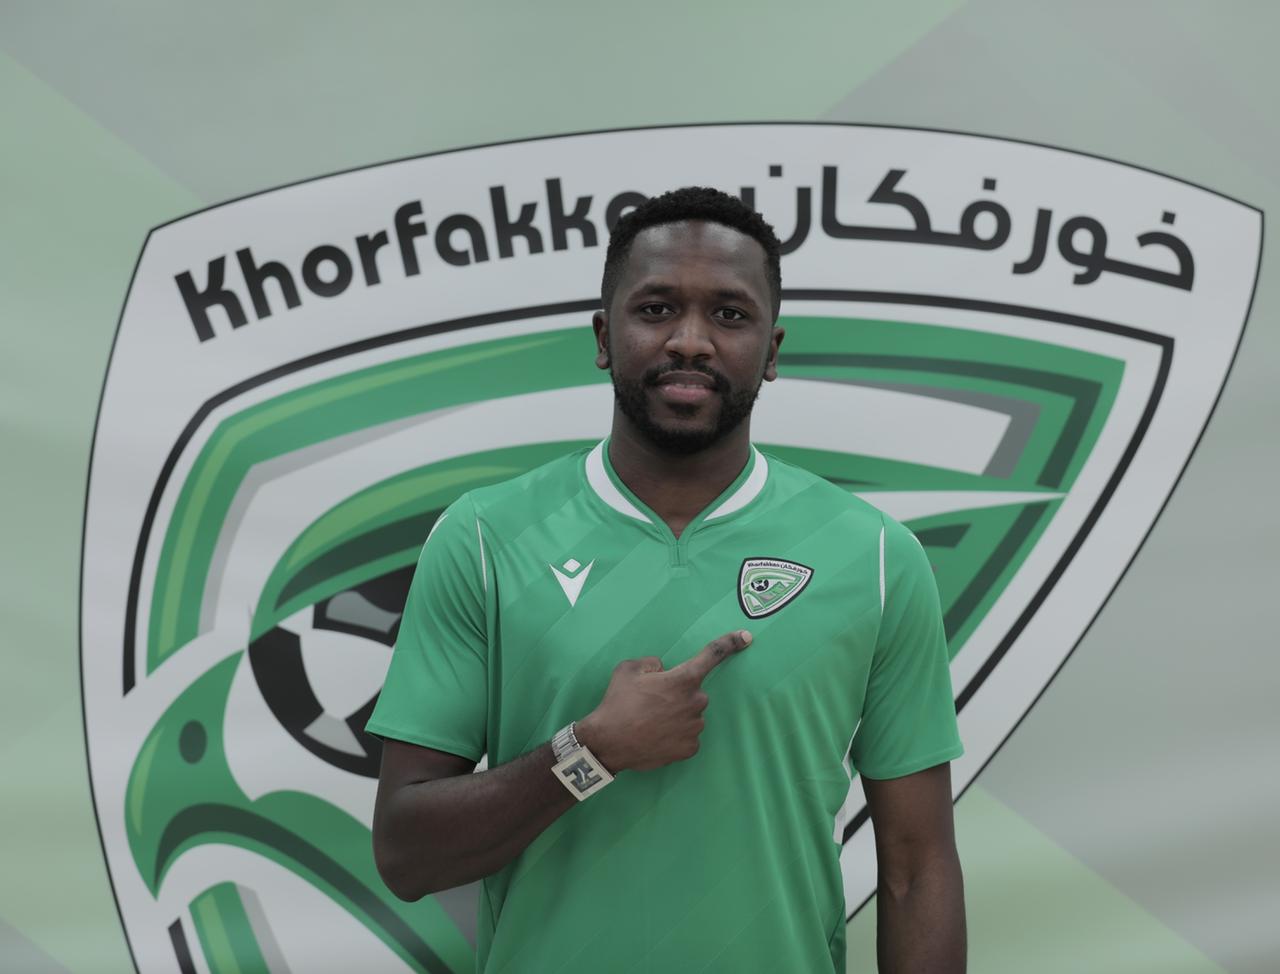 Khorfakkan Signs With Mohammed Khalfan